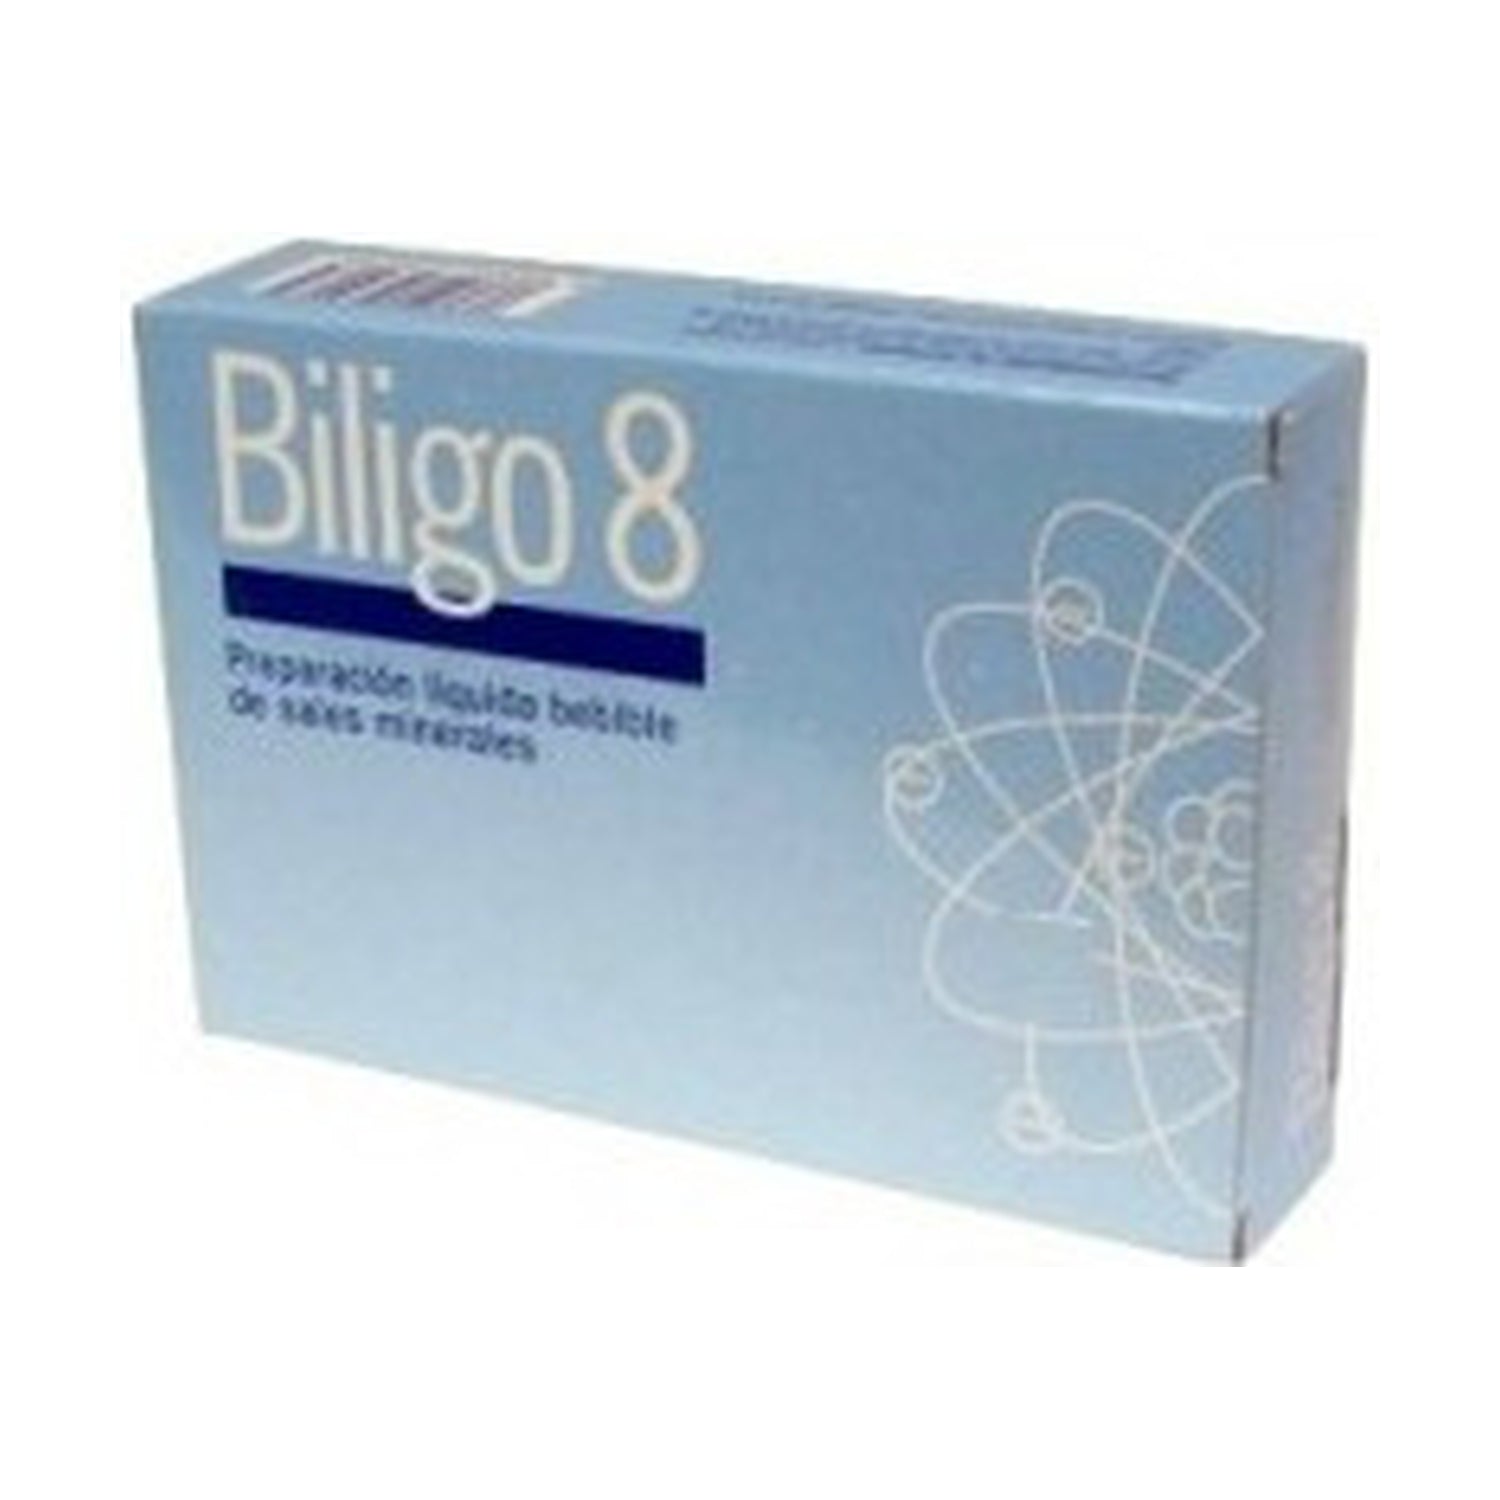 Plantis-Biligo-8-Magnesio-20-Ampollas-2Ml-Biopharmacia,-Parafarmacia-online